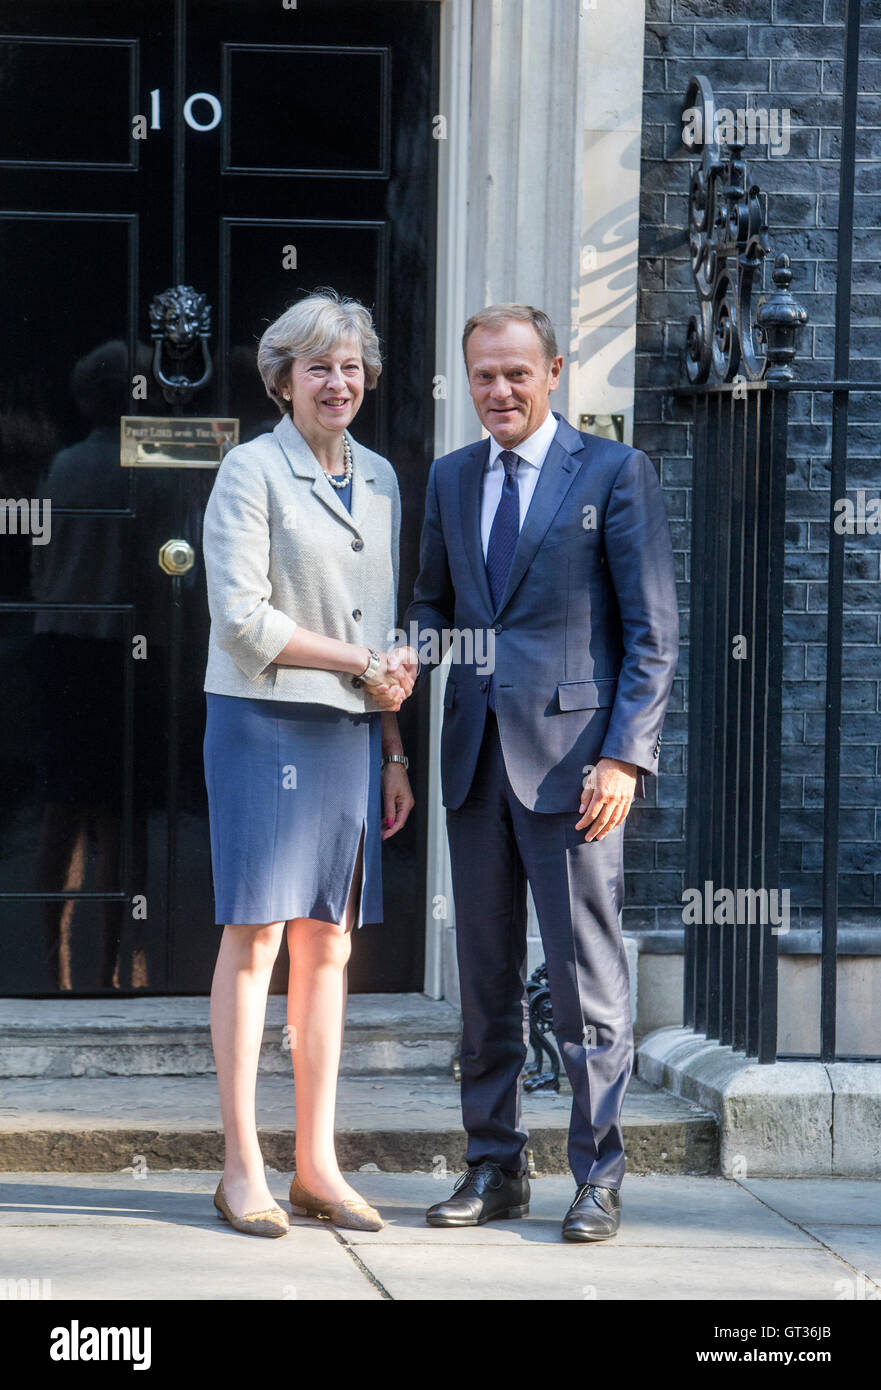 Britischer Premierminister Theresa kann (L) begrüßt Präsident des Europäischen Rates, Donald Tusk, 10 Downing Street in London Stockfoto